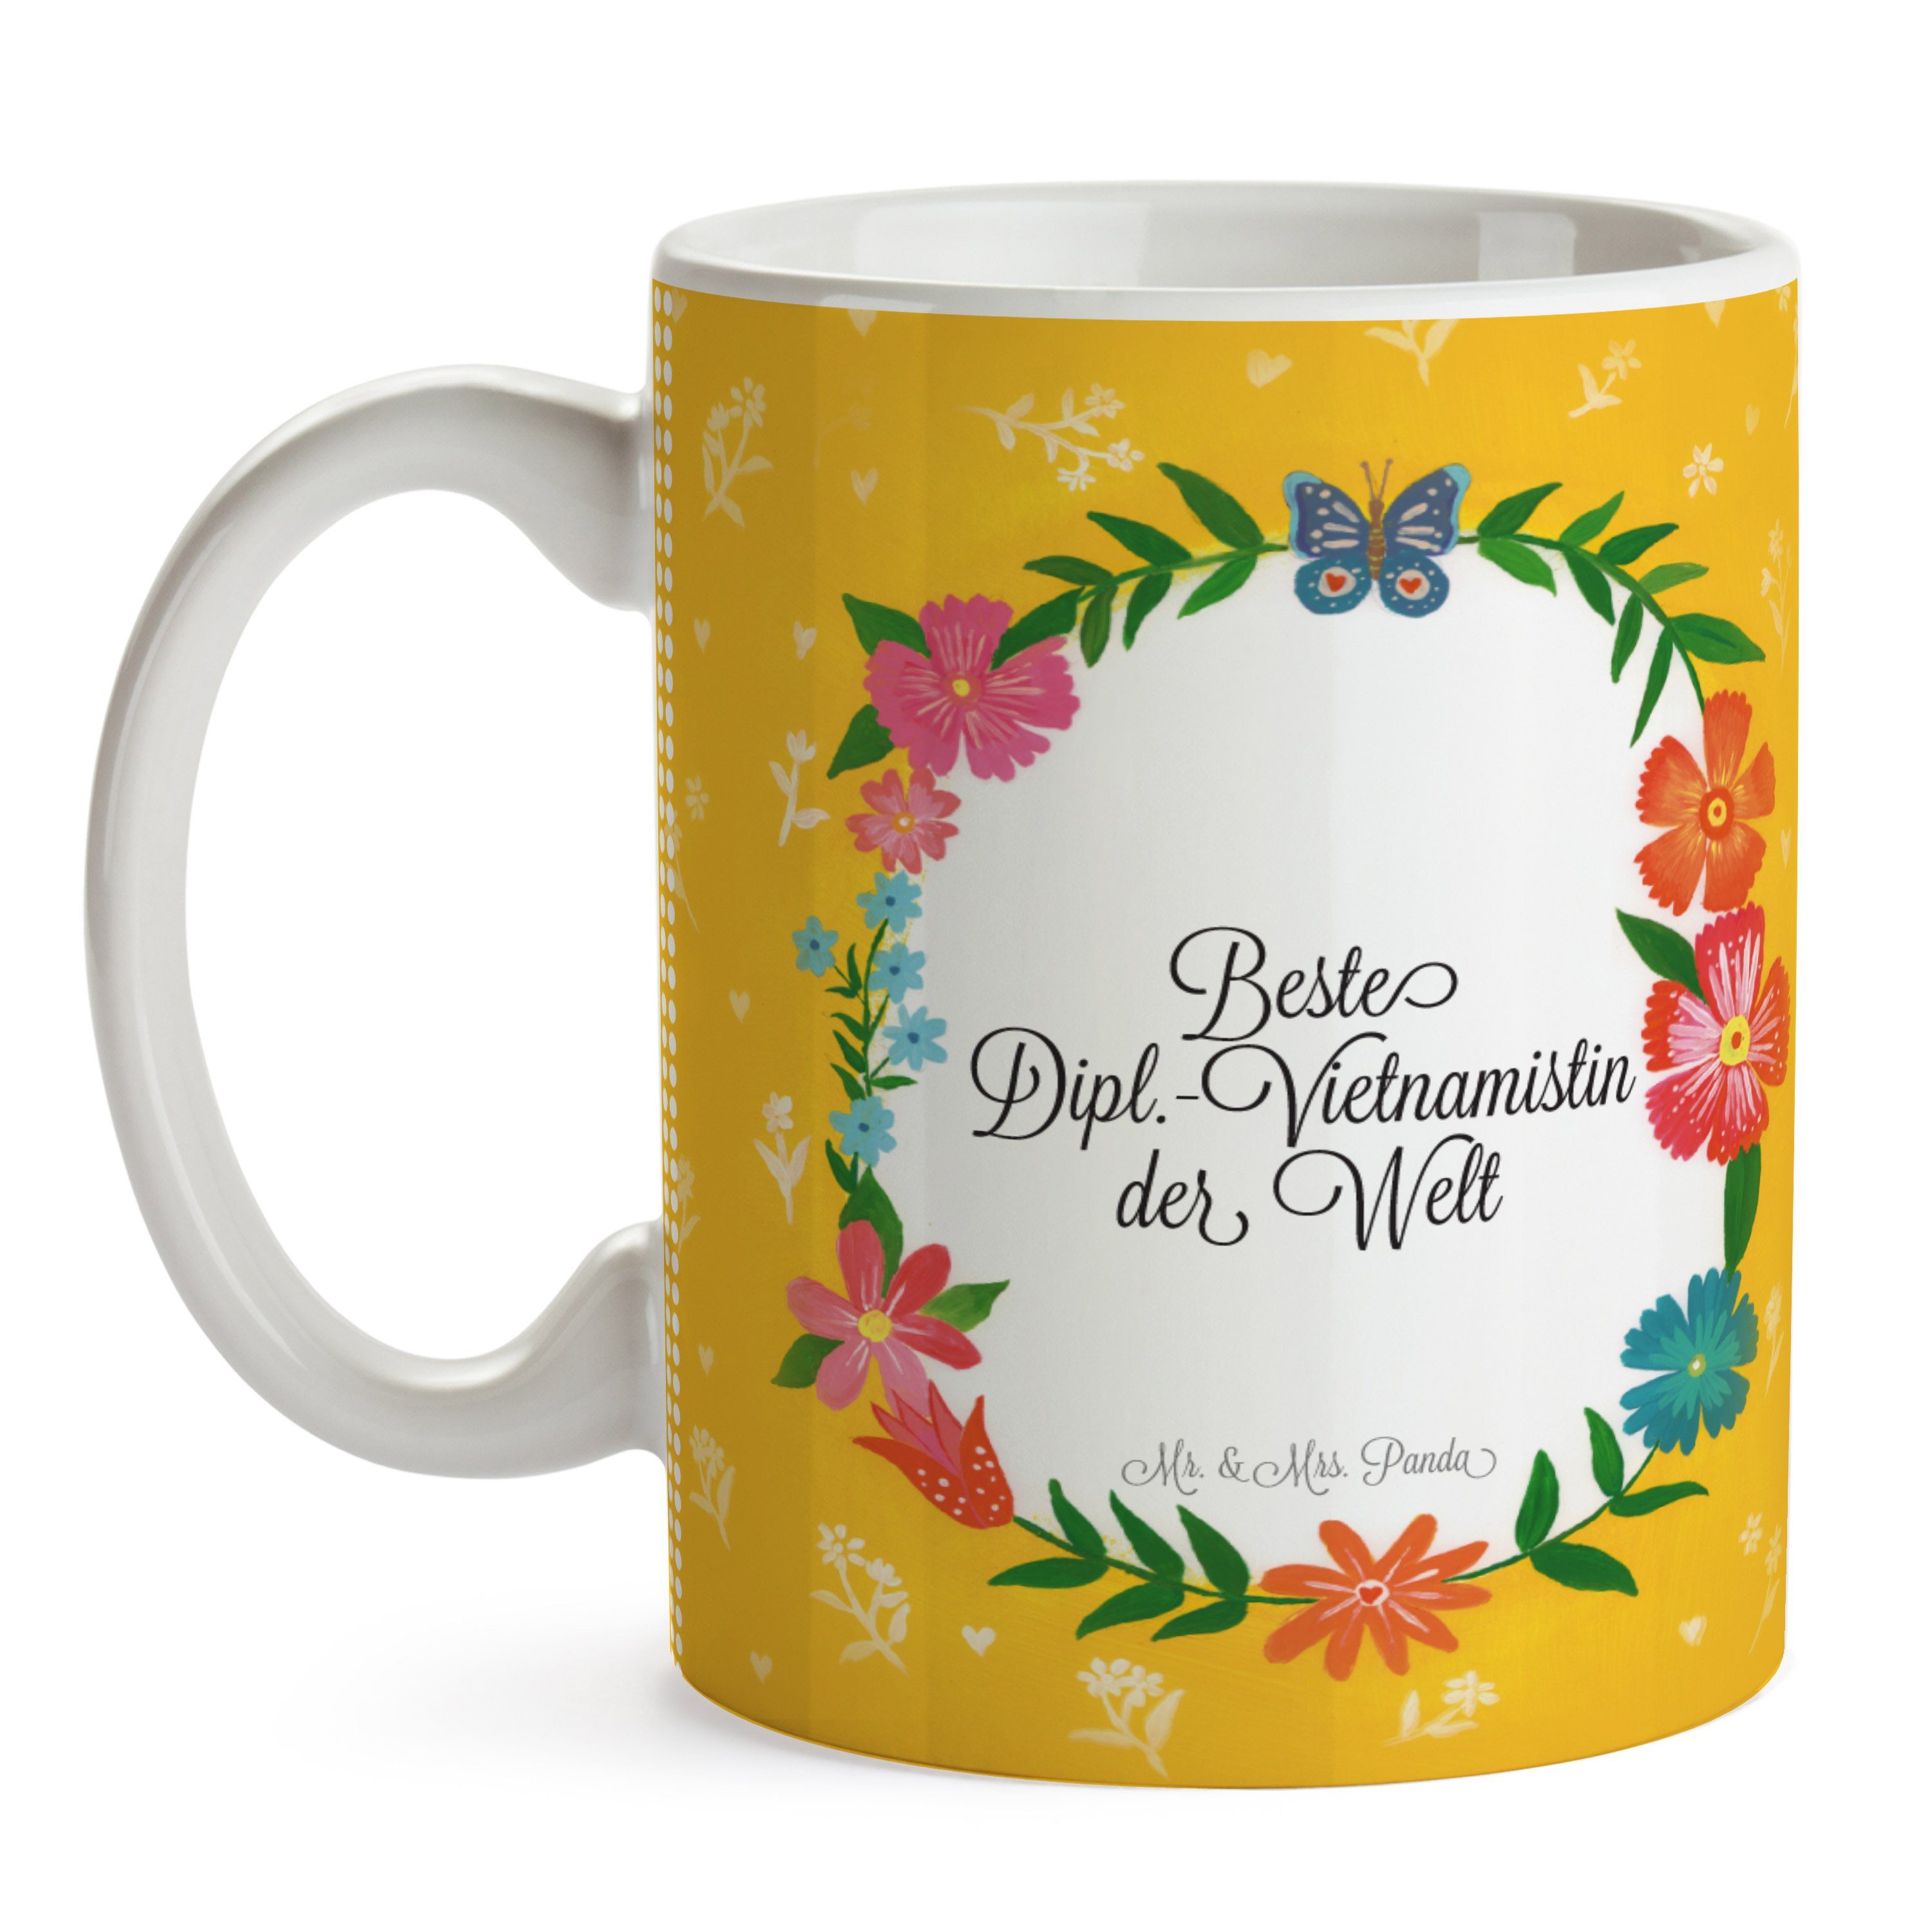 Mrs. Dipl.-Vietnamistin Geschenk, - Teebecher, Mr. & D, Geschenk Tasse, Teetasse, Panda Tasse Keramik